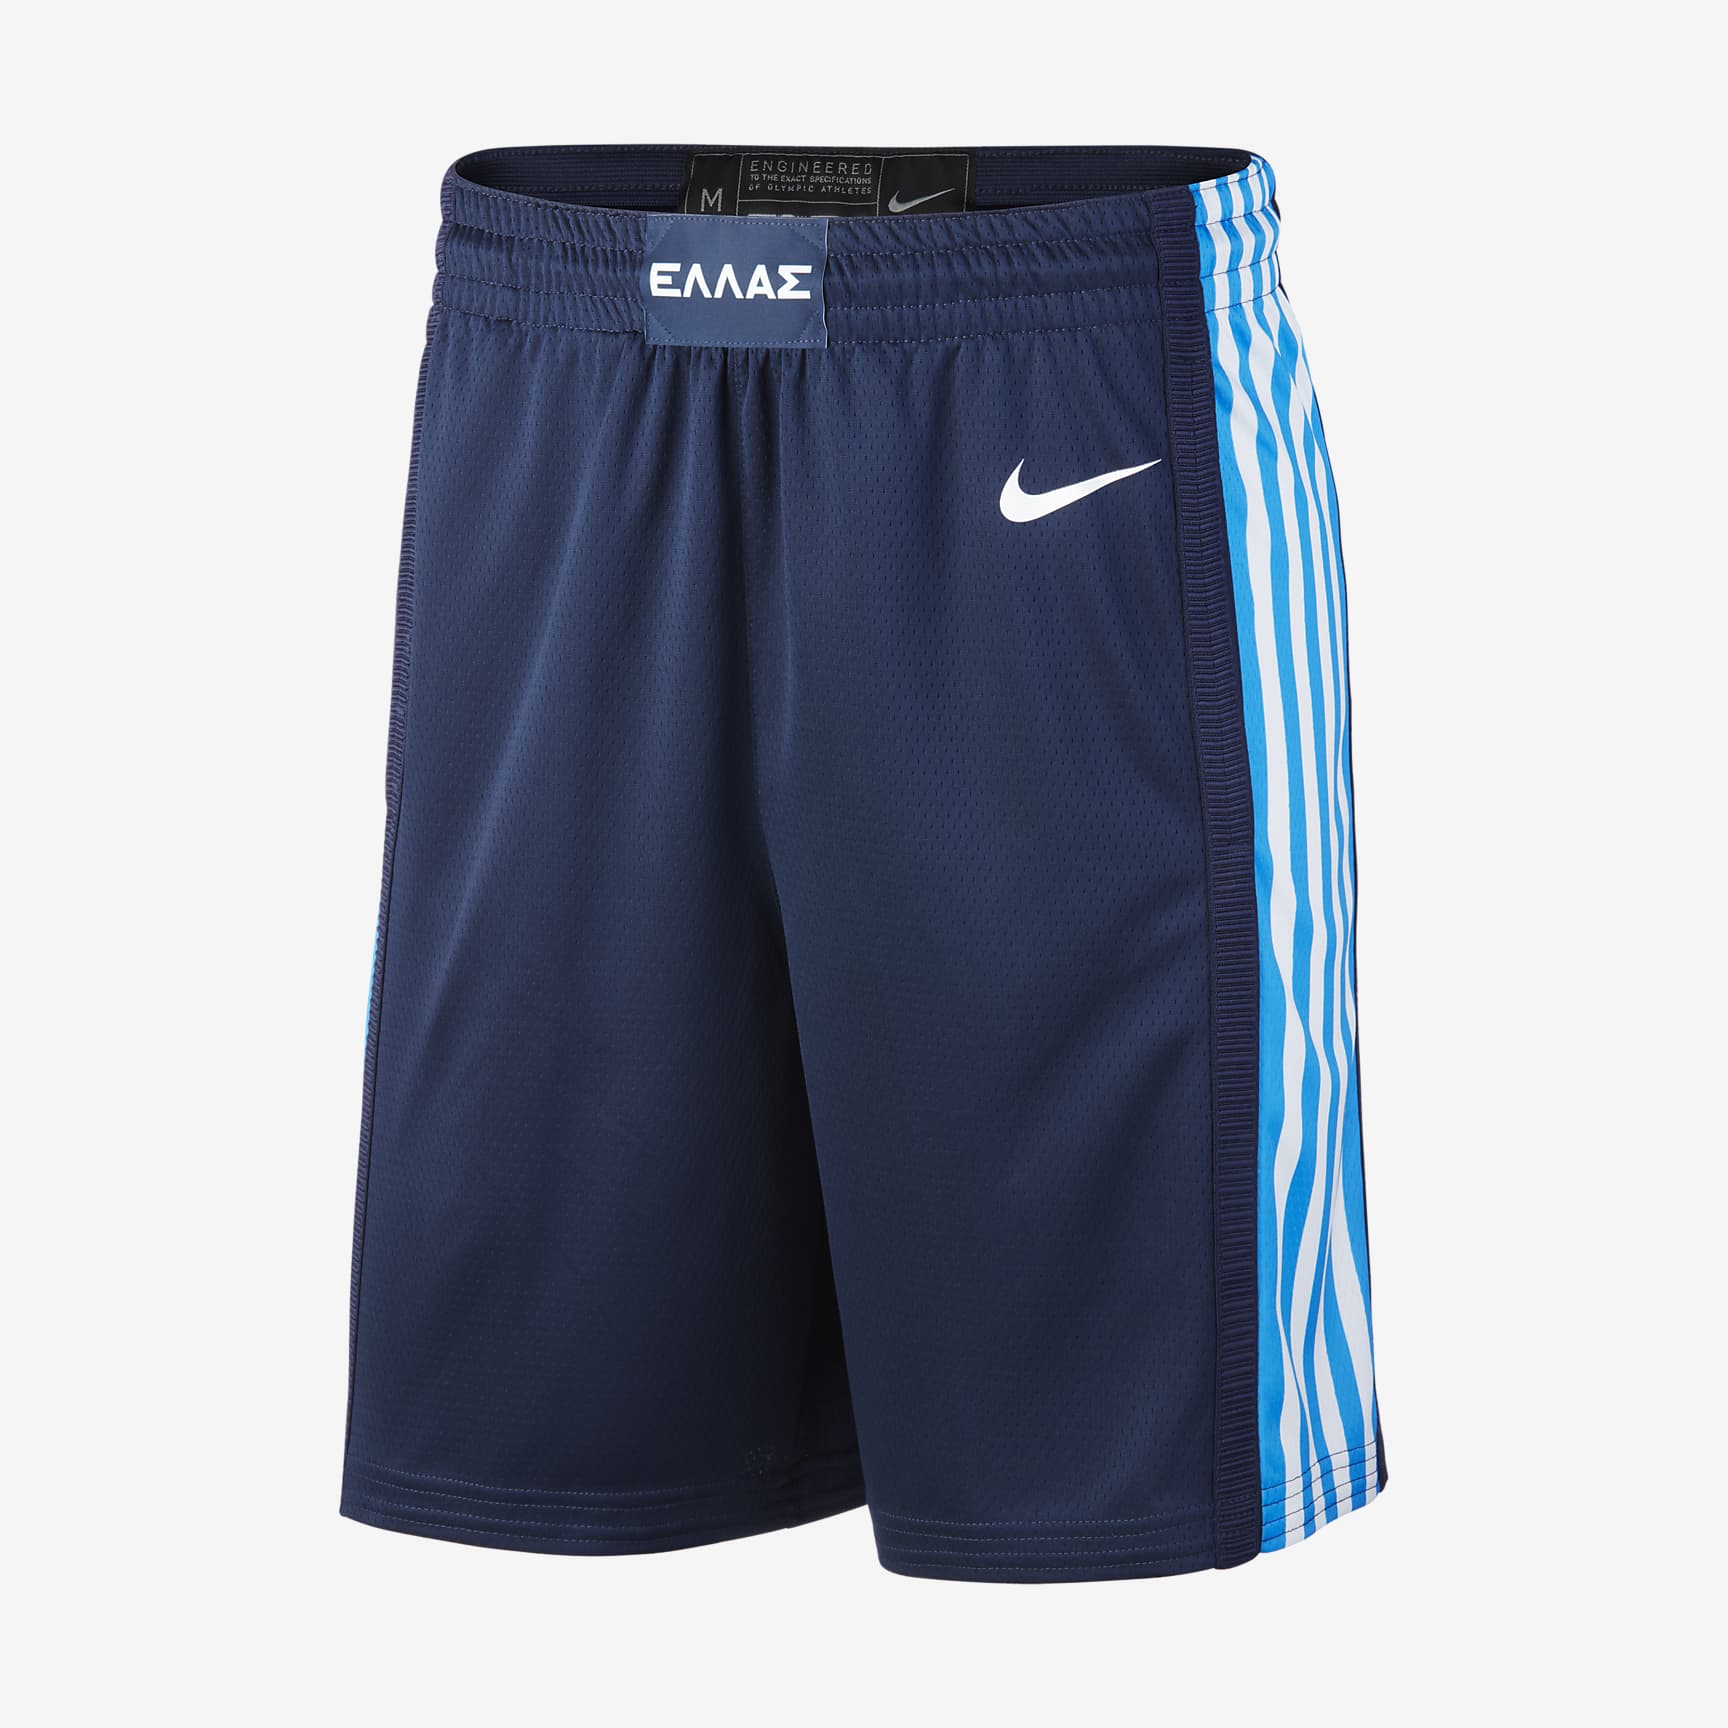 Greece Nike (Road) Limited Men's Basketball Shorts. Nike CA